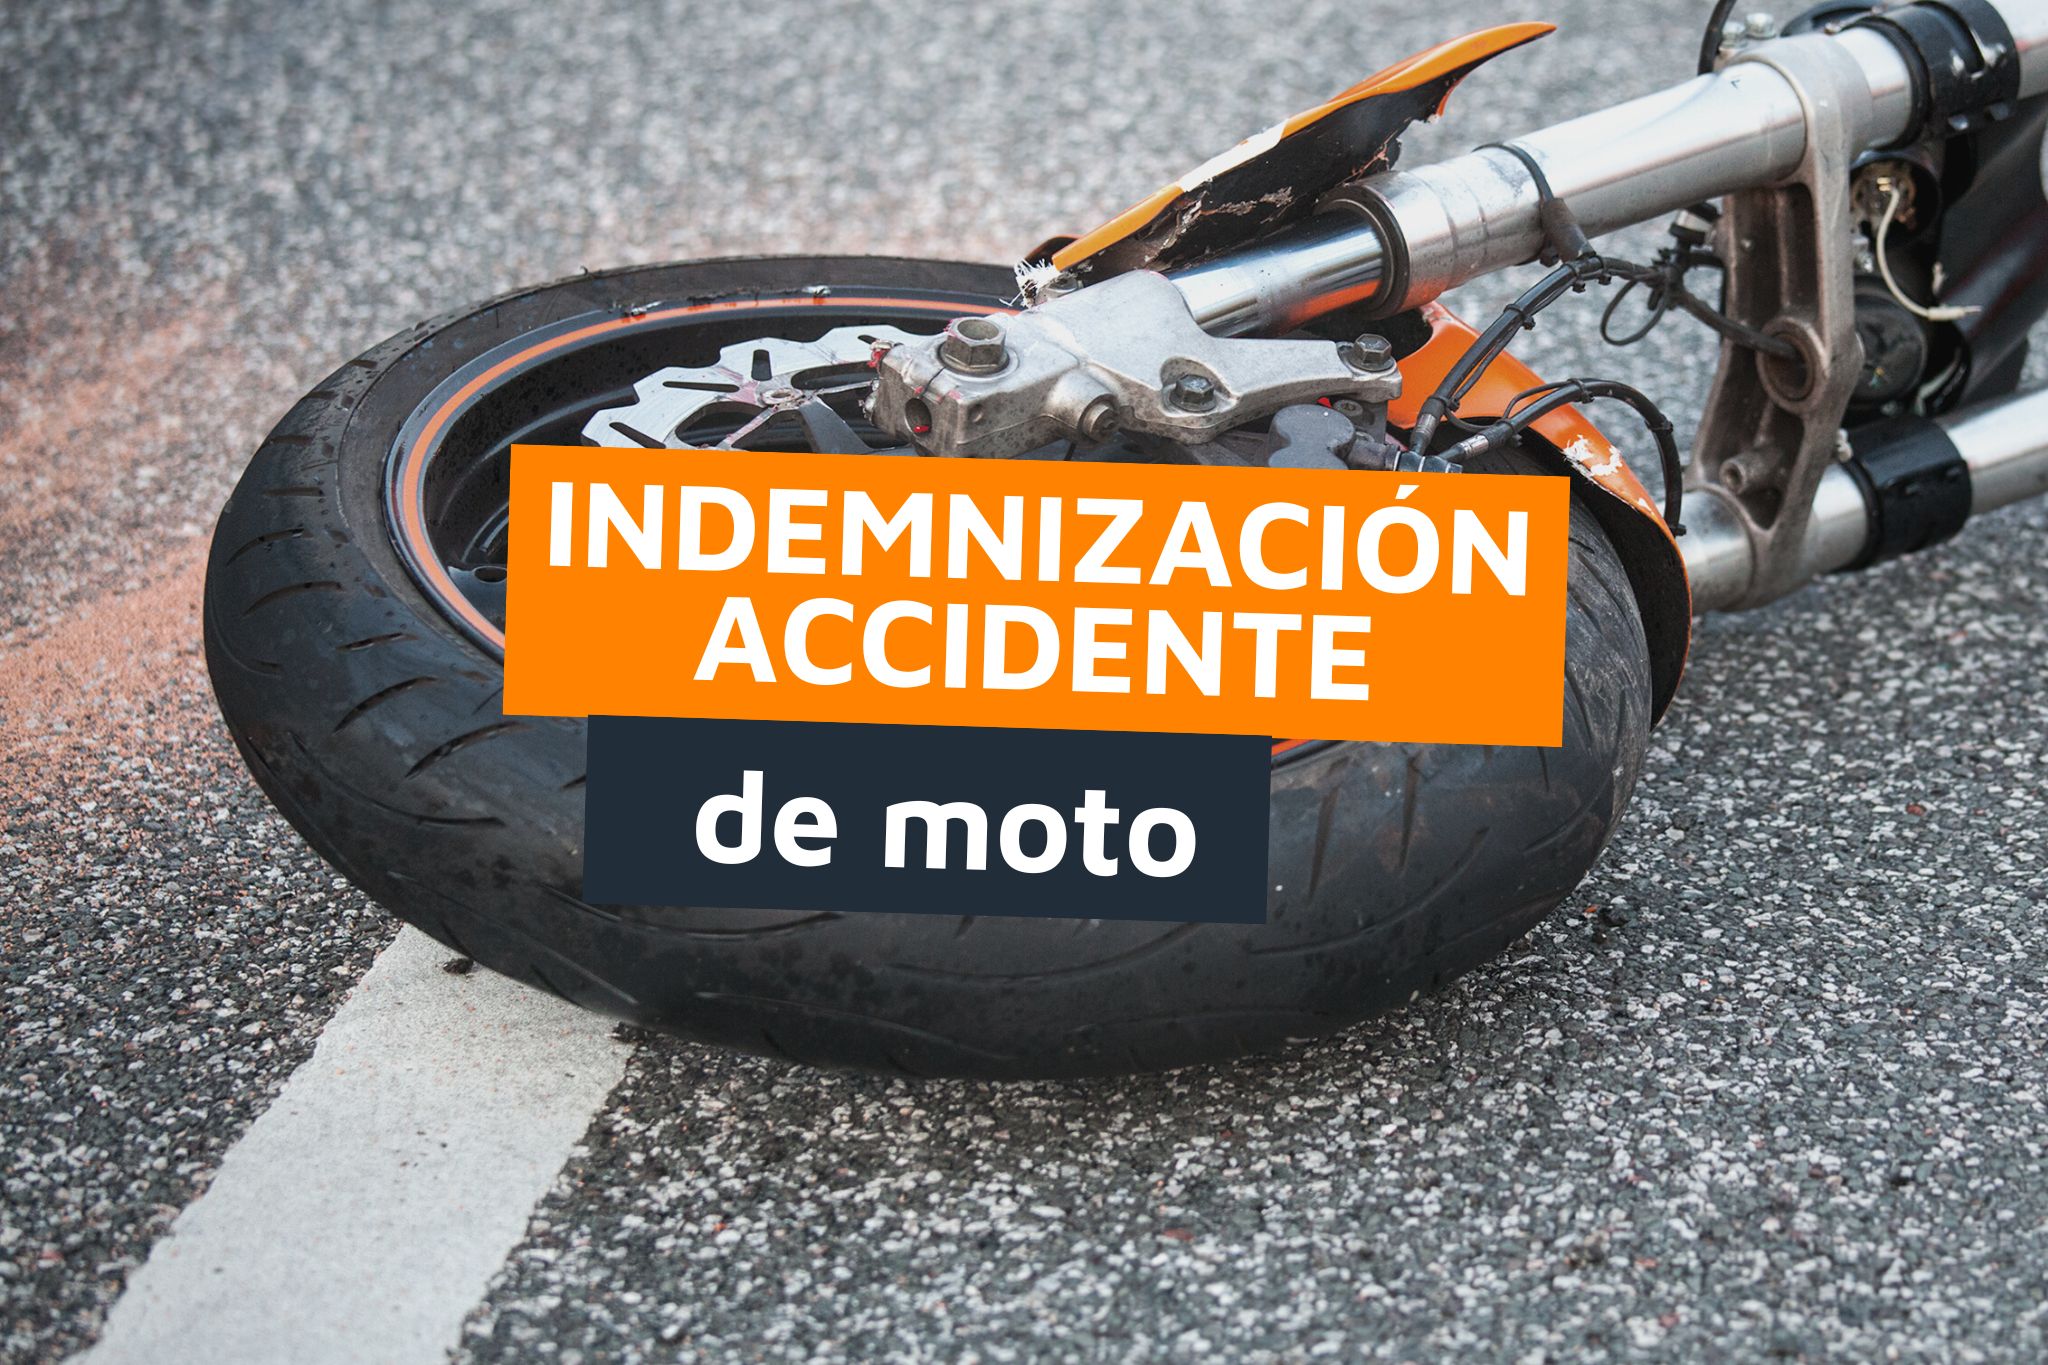 Indemnizacion accidente moto